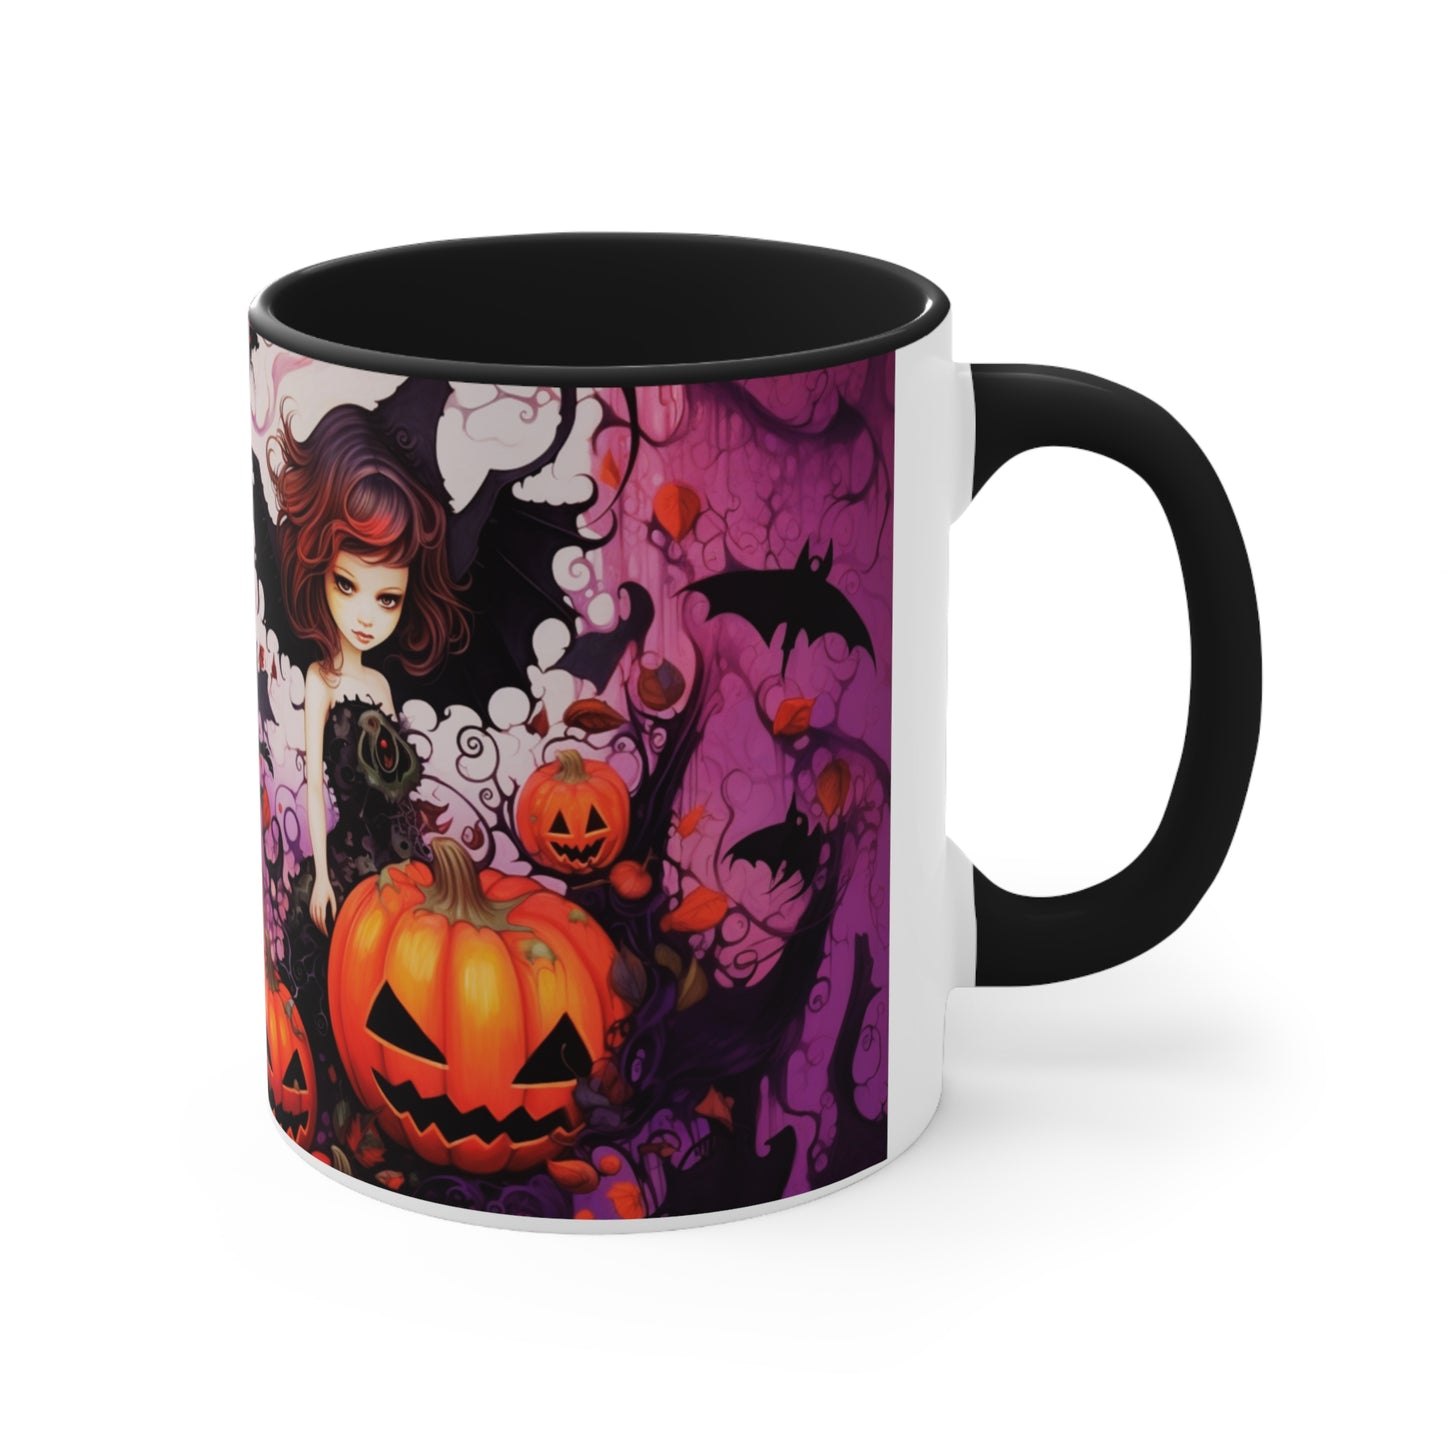 Bat girl with pumpkins and bats | Original Art| Accent Coffee Mug, 11oz